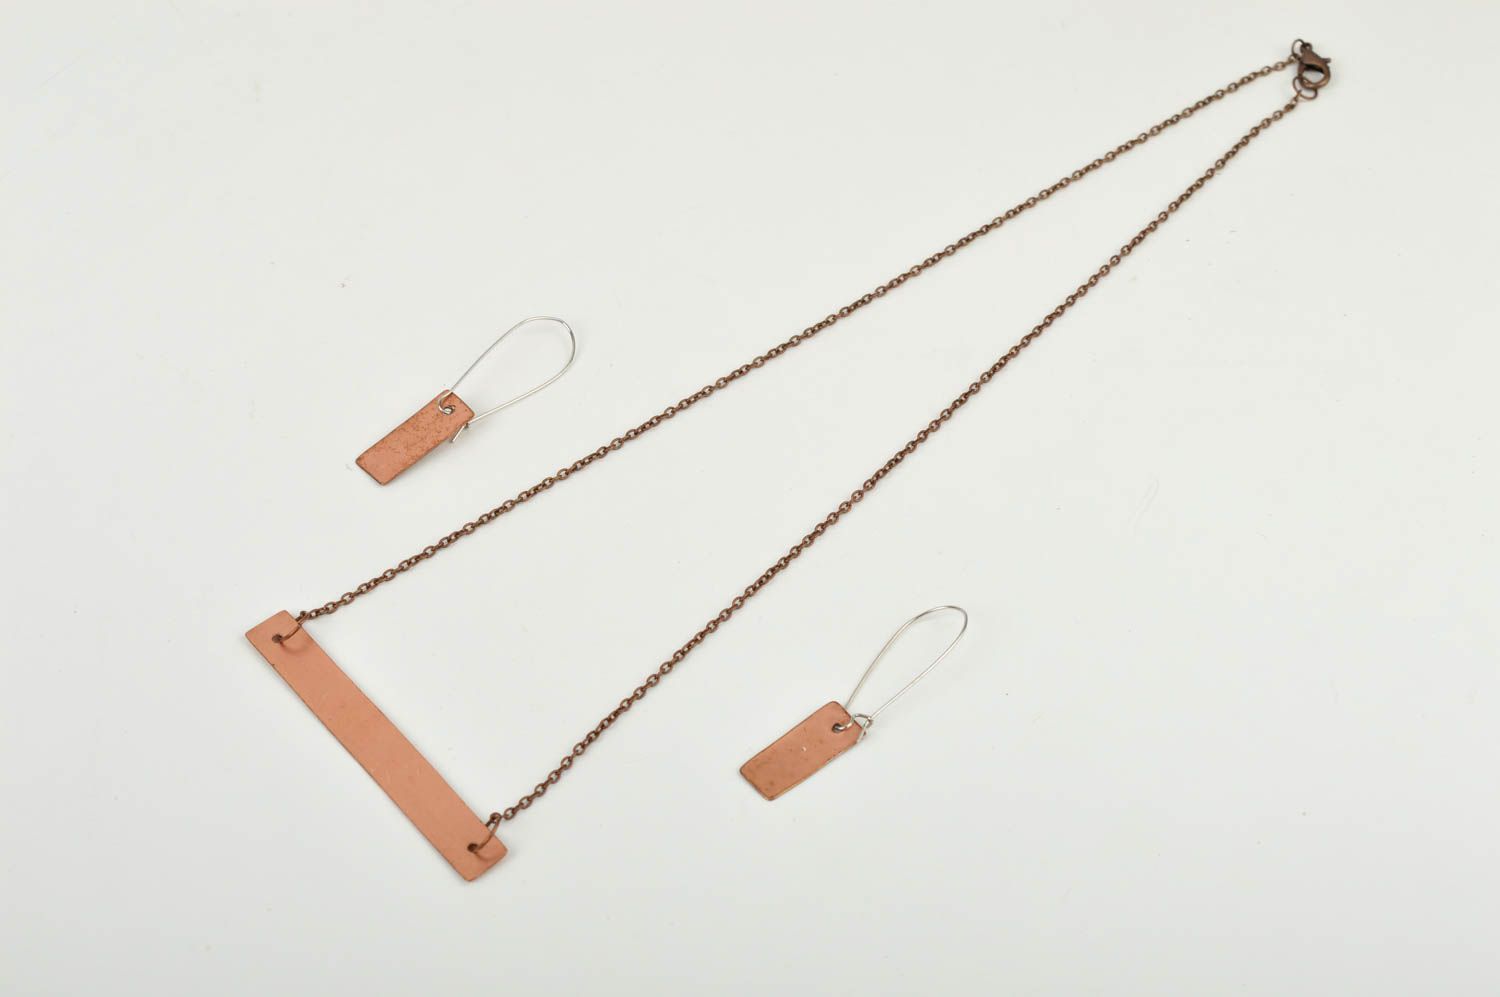 Handmade forged copper jewelry designer metal pendant dangling earrings photo 2